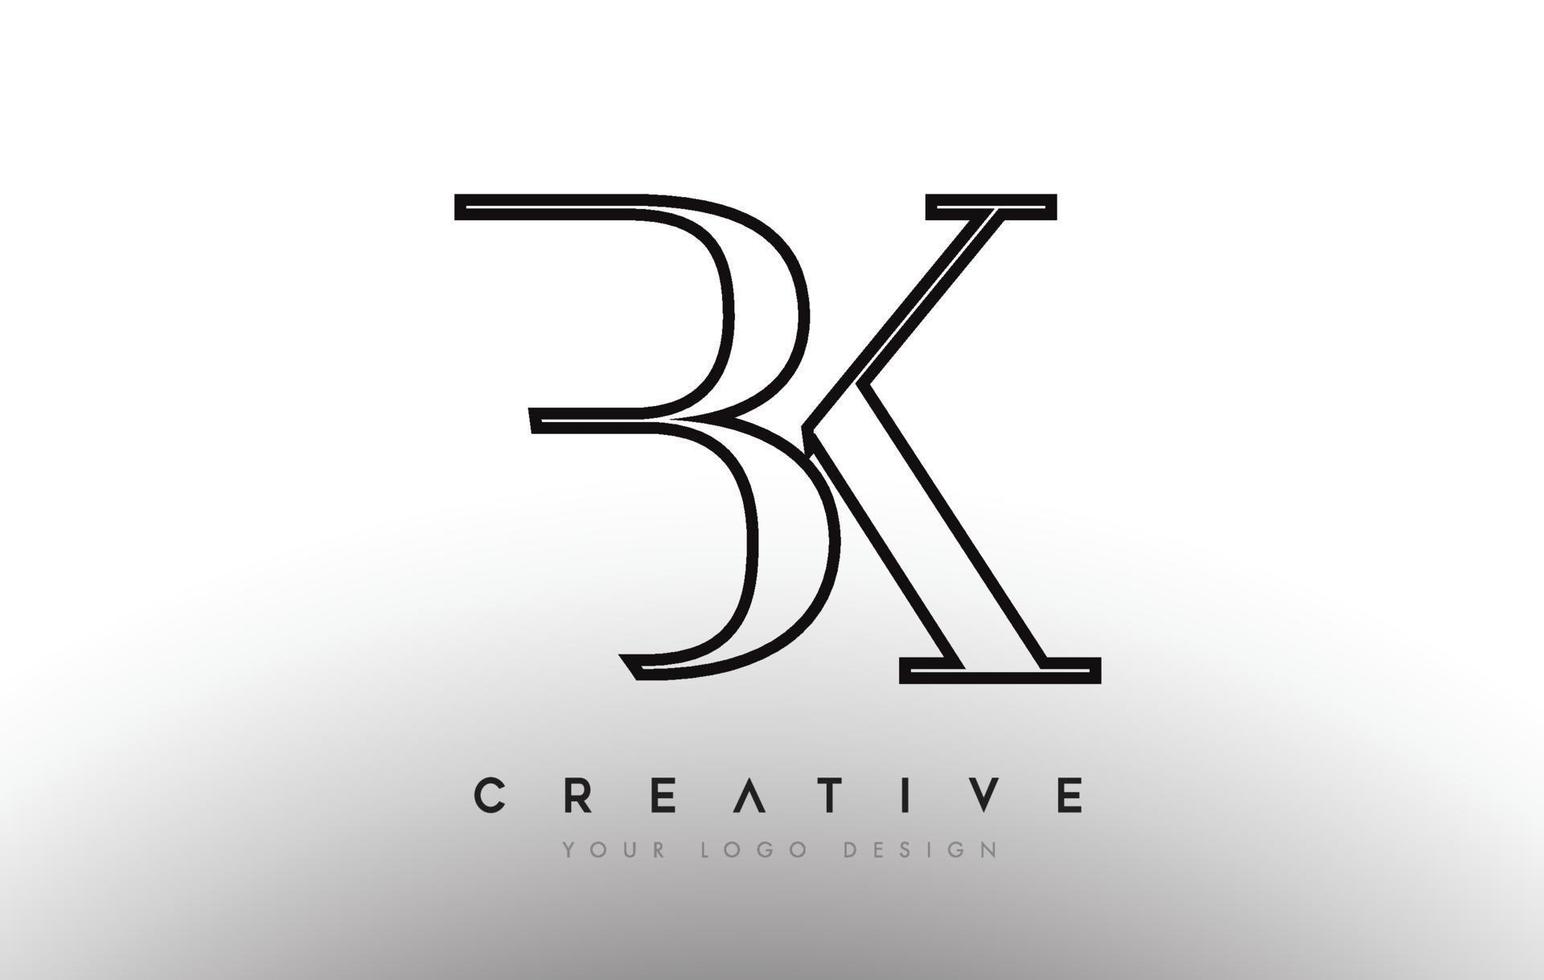 bk bk letter design logo logotype icon concept con serif font e classico stile elegante look vector